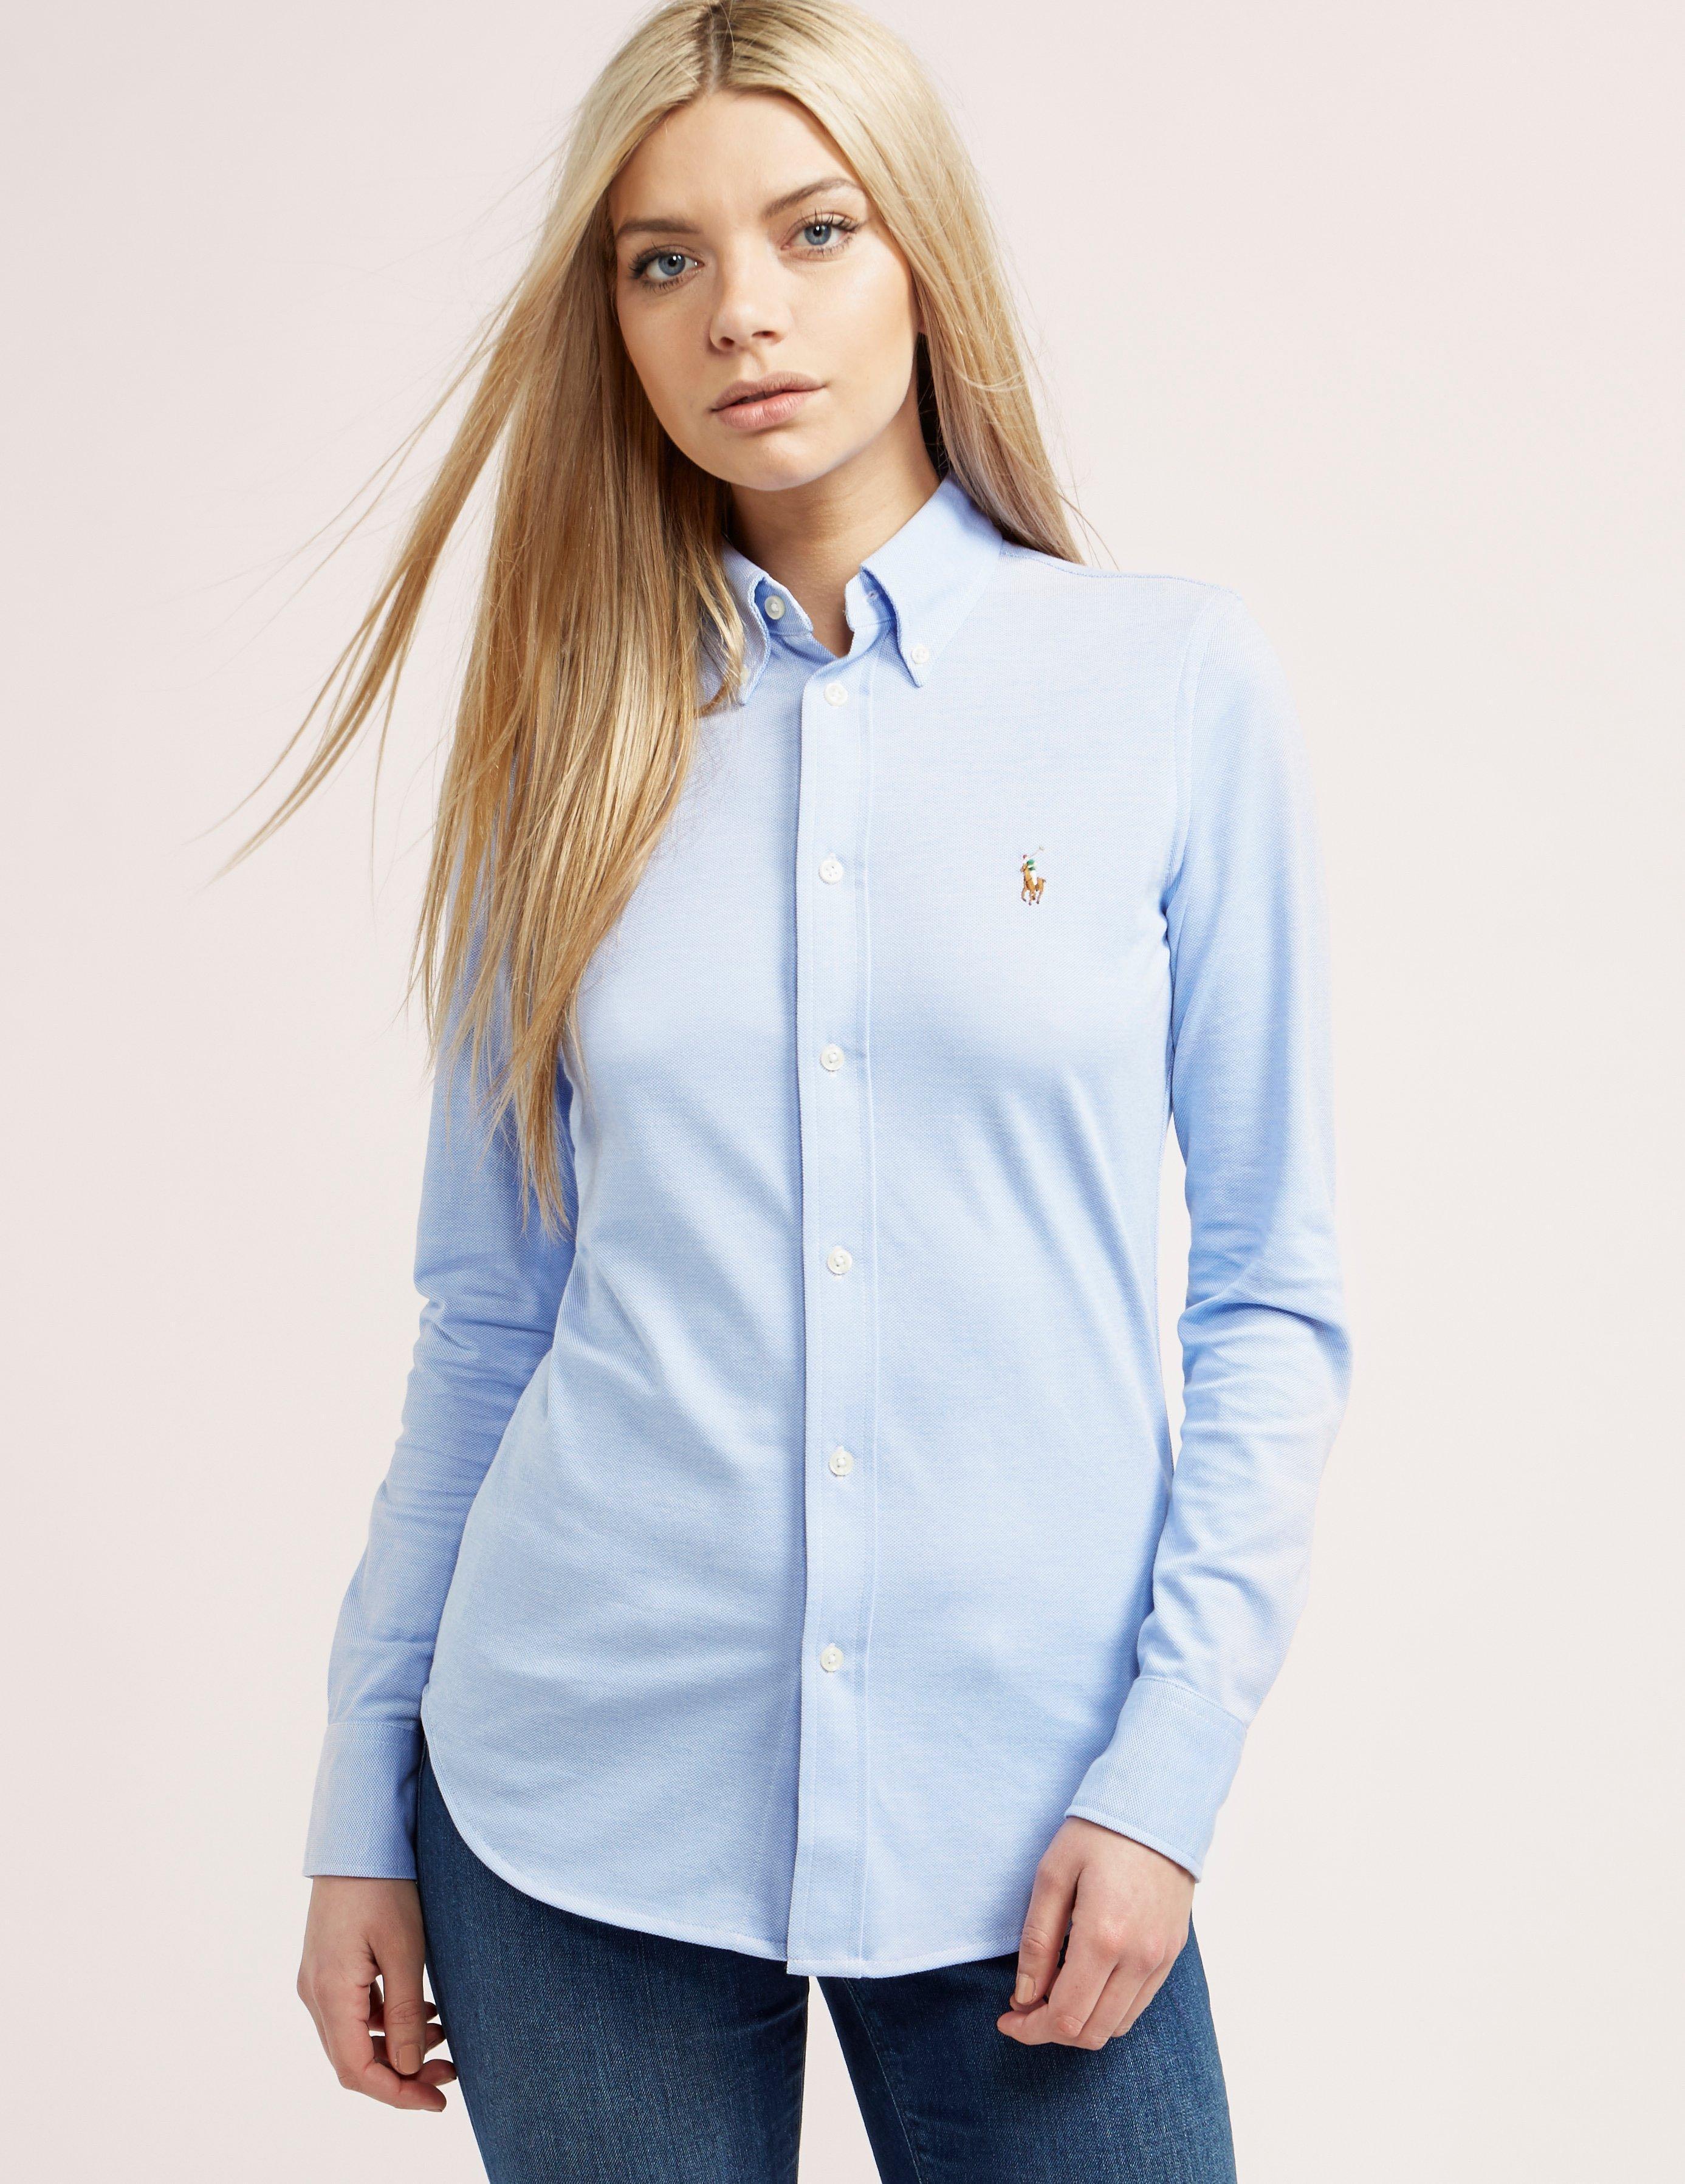 Polo Ralph Lauren Oxford Shirt in Blue, Women's Fashion, Tops, Longsleeves  on Carousell